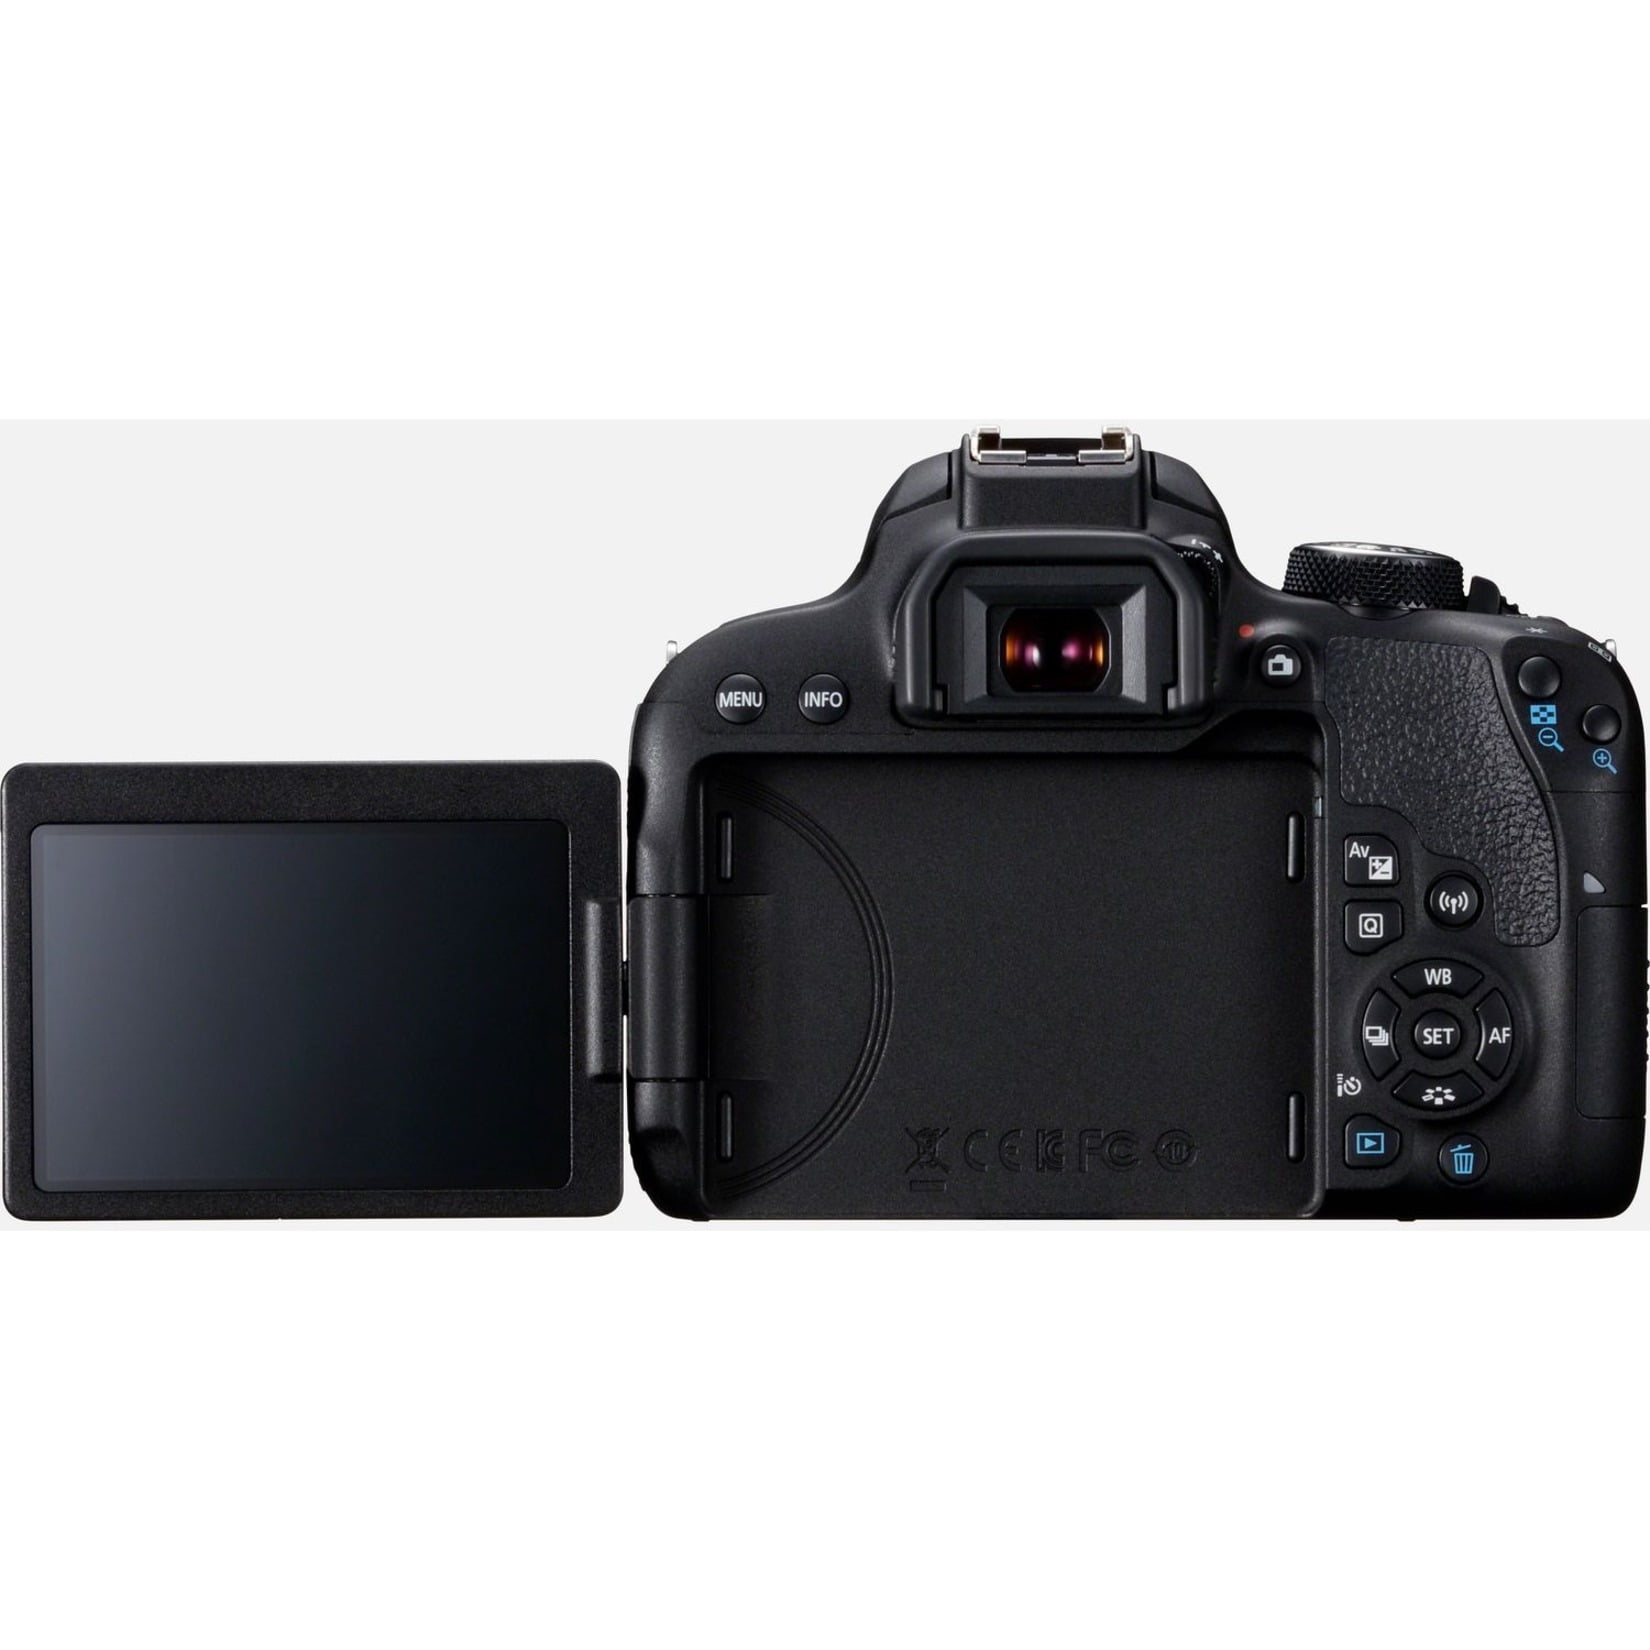 EOS 800D 24.2 Megapixel Digital SLR with Lens, 0.71", Black - Walmart.com